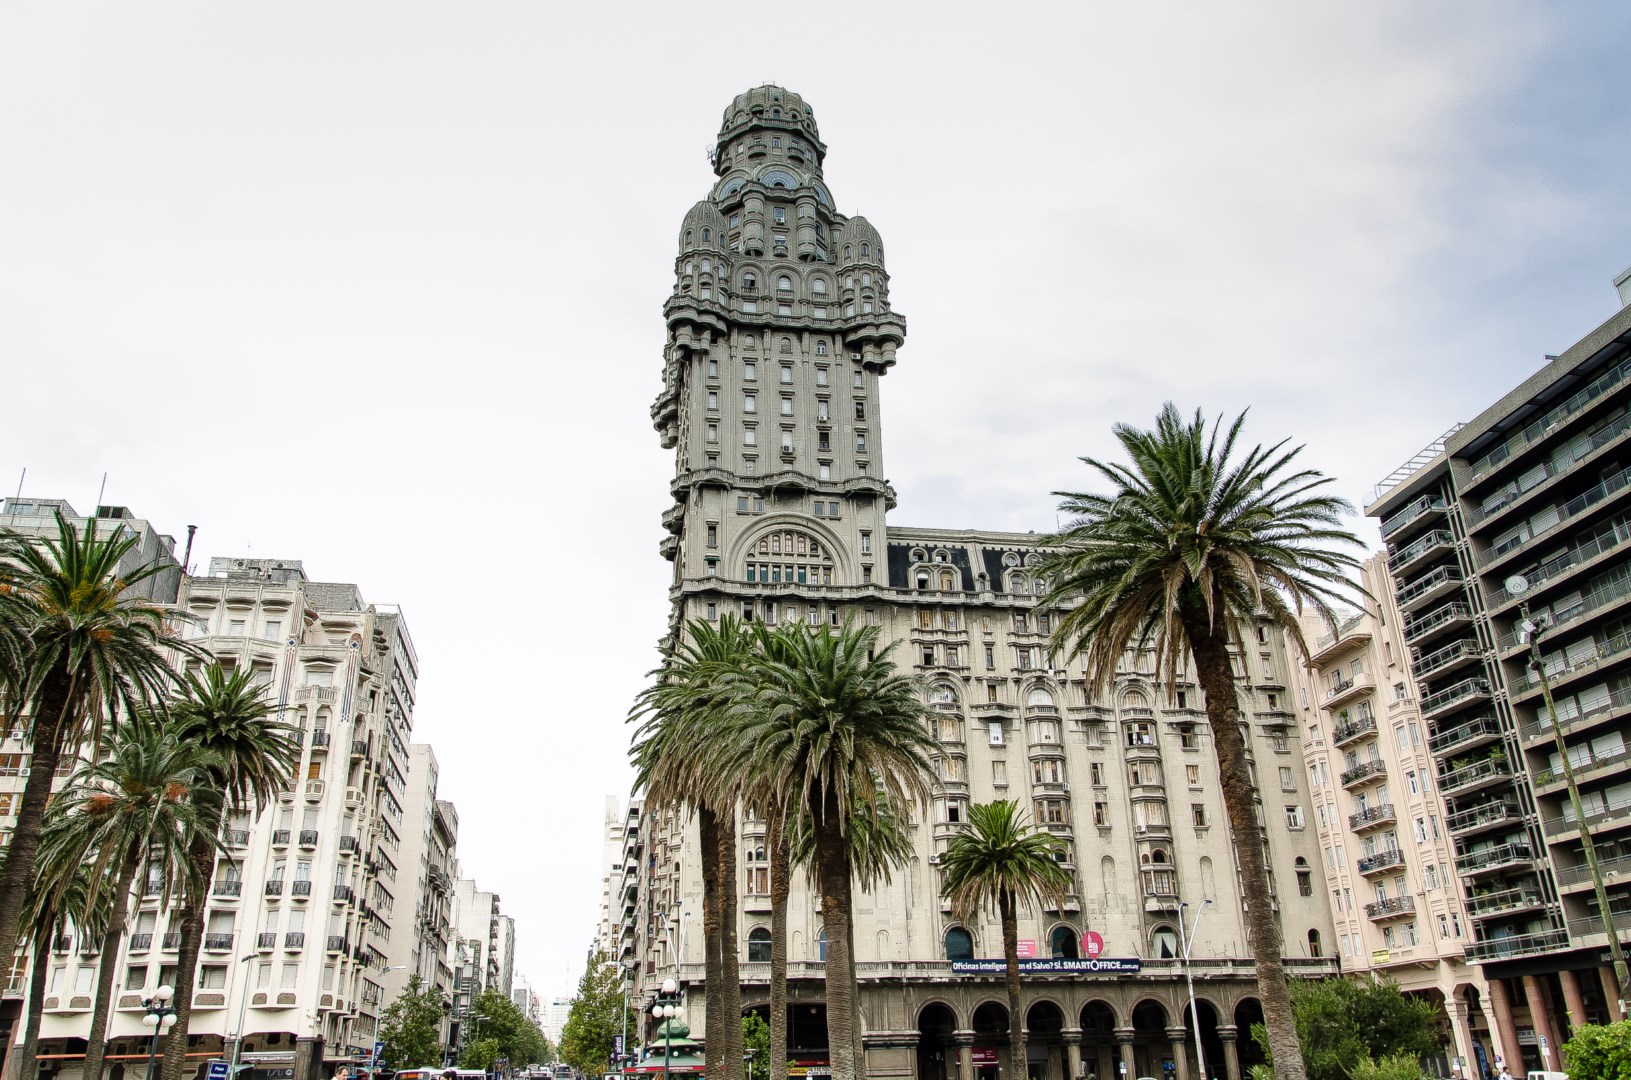 Montevideo, Uruguay, Photo from https://upload.wikimedia.org/wikipedia/commons/5/5c/Palacio_Salvo_Montevideo-Uruguay.JPG